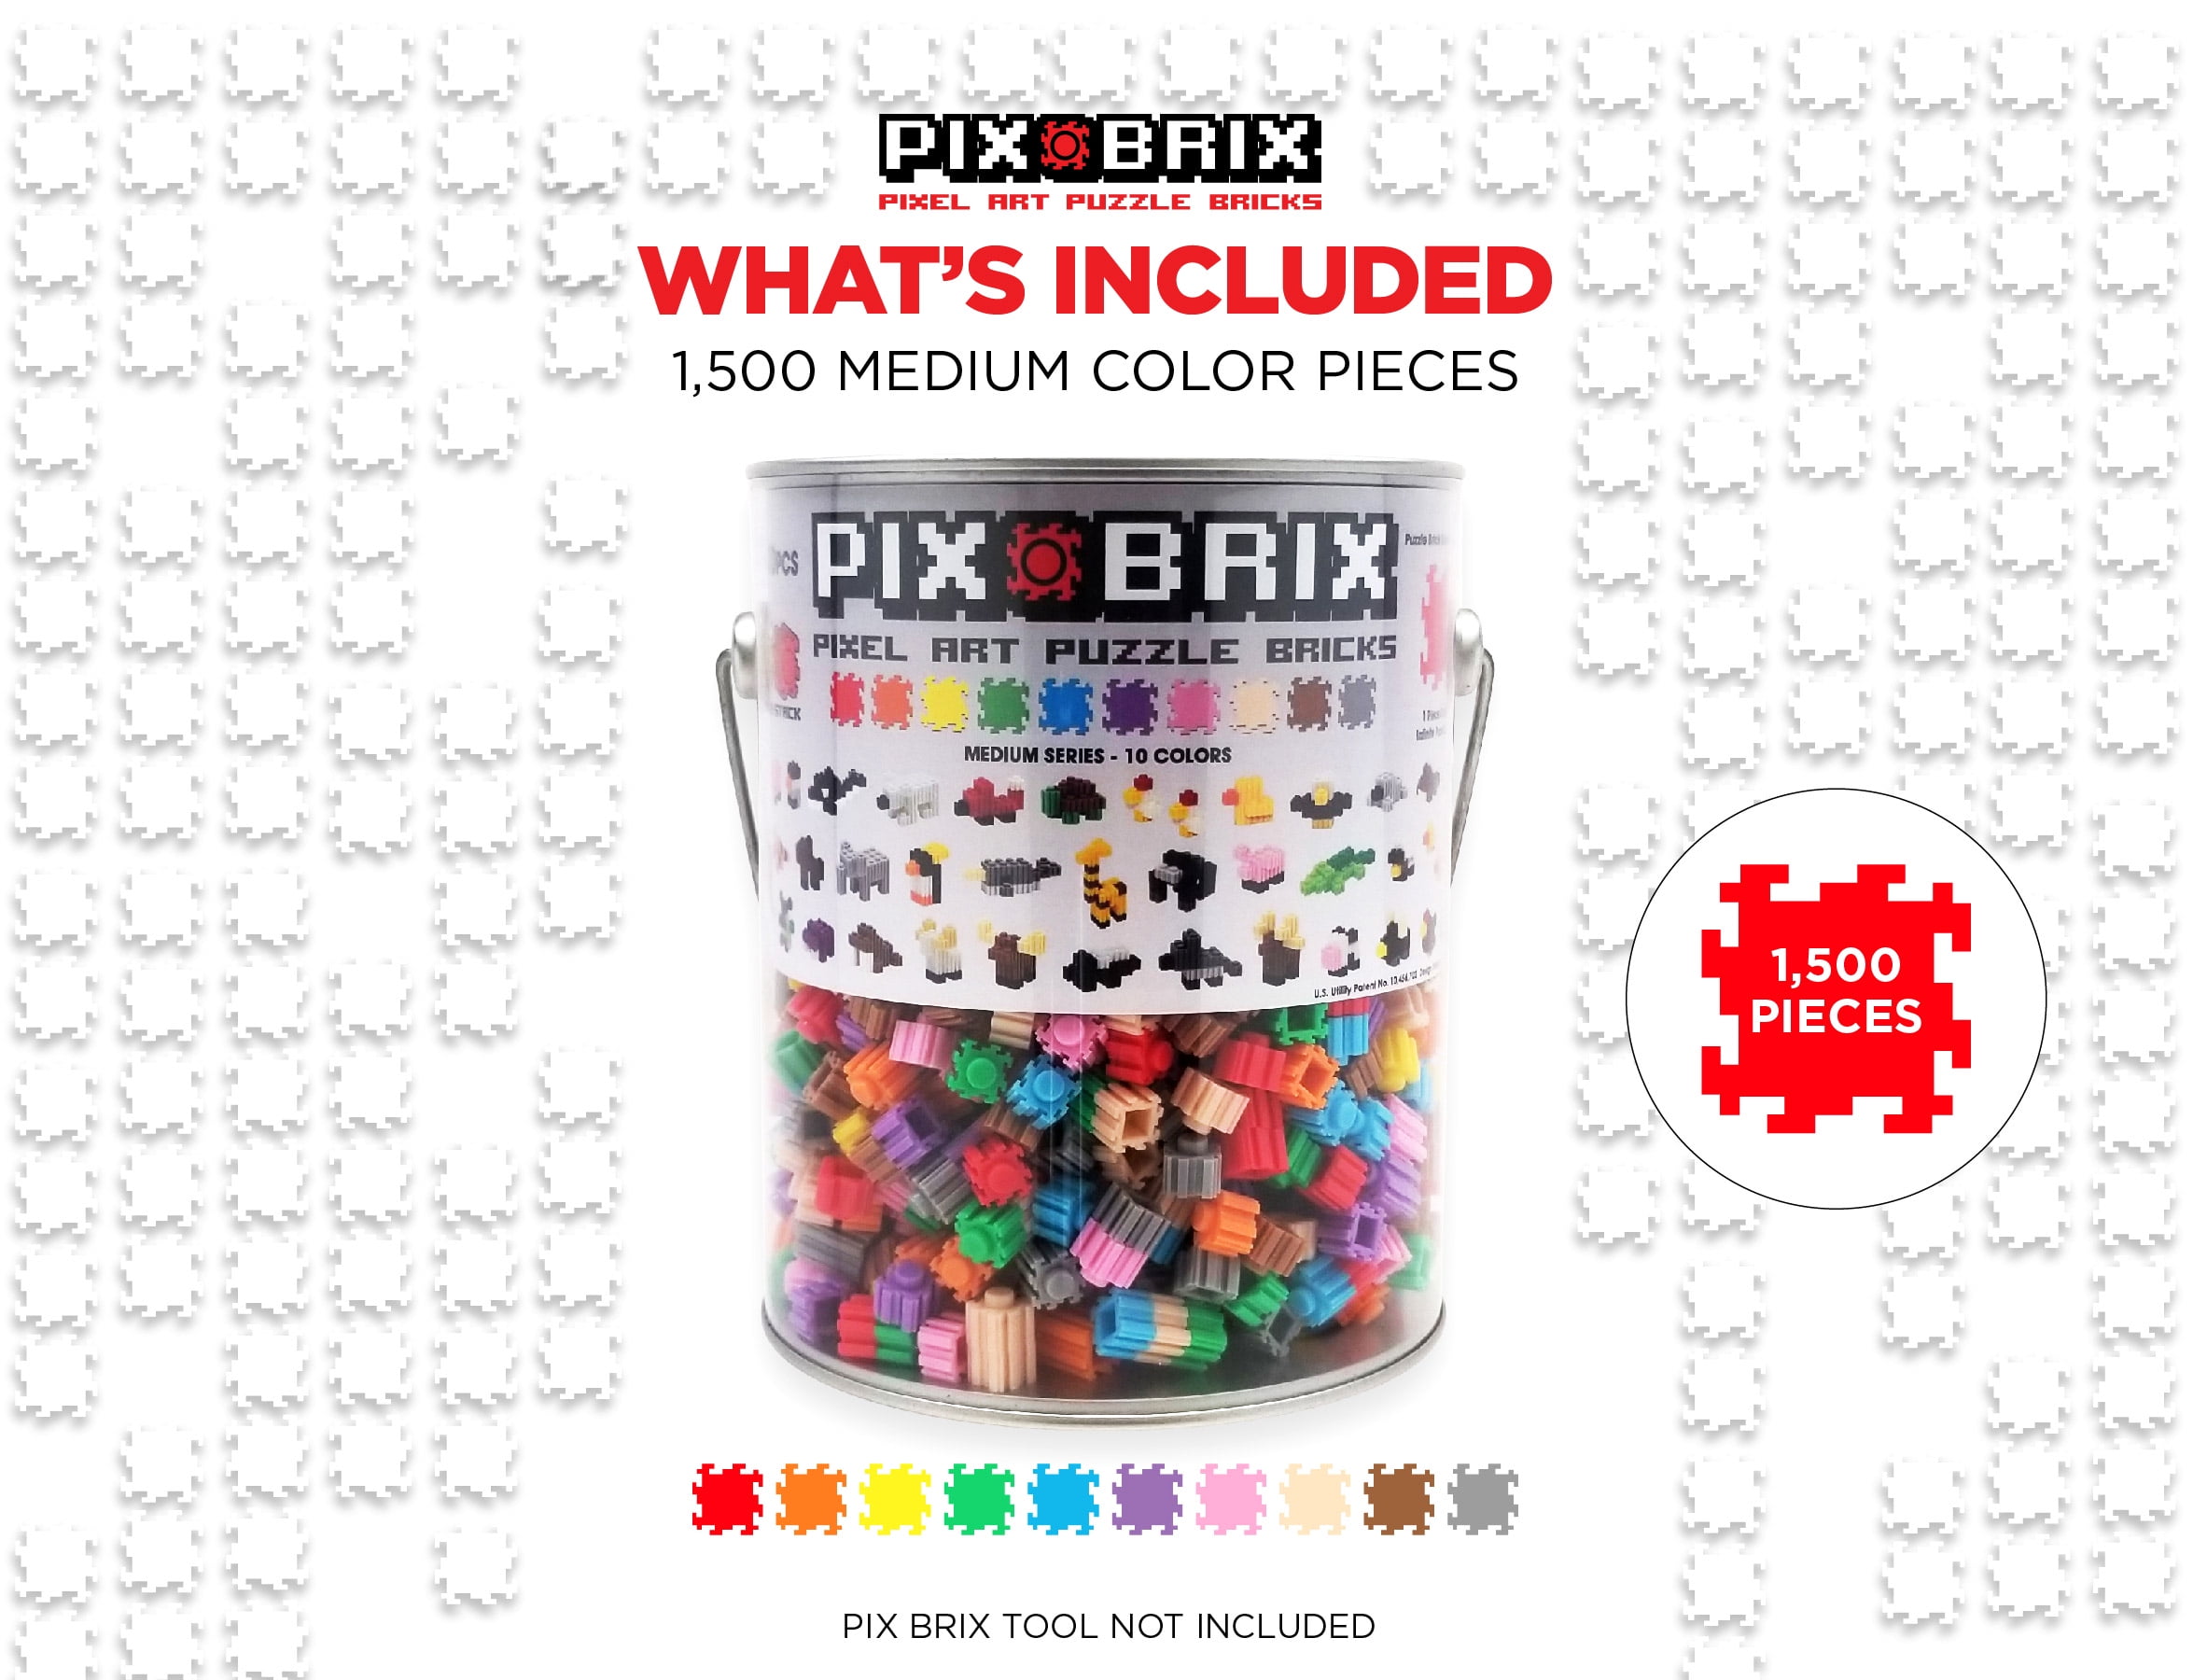 Pix Brix Pixel Art Puzzle Bricks Bucket – 1,500 Piece Pixel Art Kit with 10  Colors, Medium Palette – Patented Interlocking Building Bricks, Create 2D